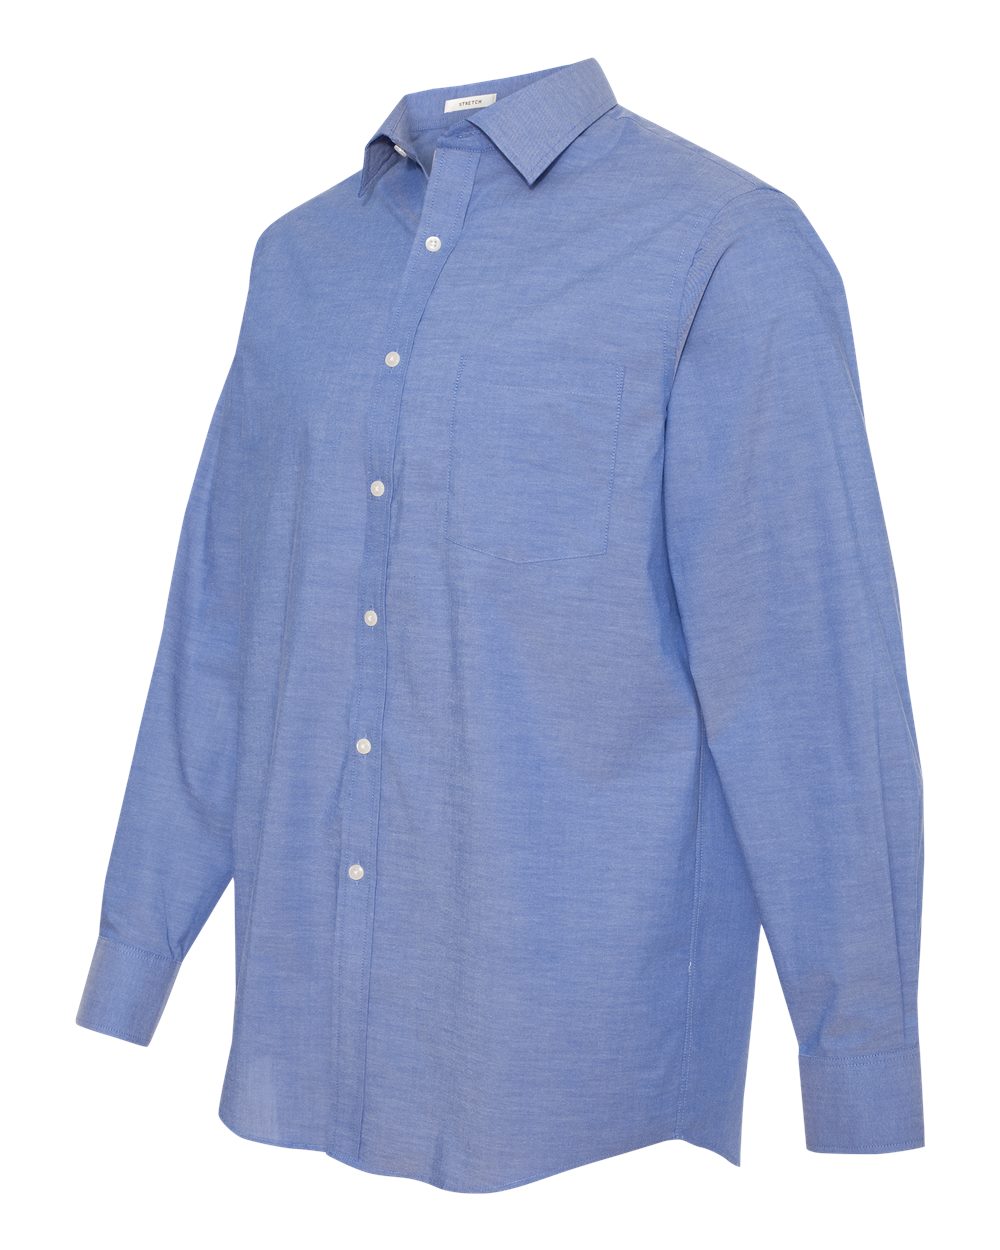 Van Heusen 13V0237 Stretch Pinpoint Spread Collar Shirt $23.32